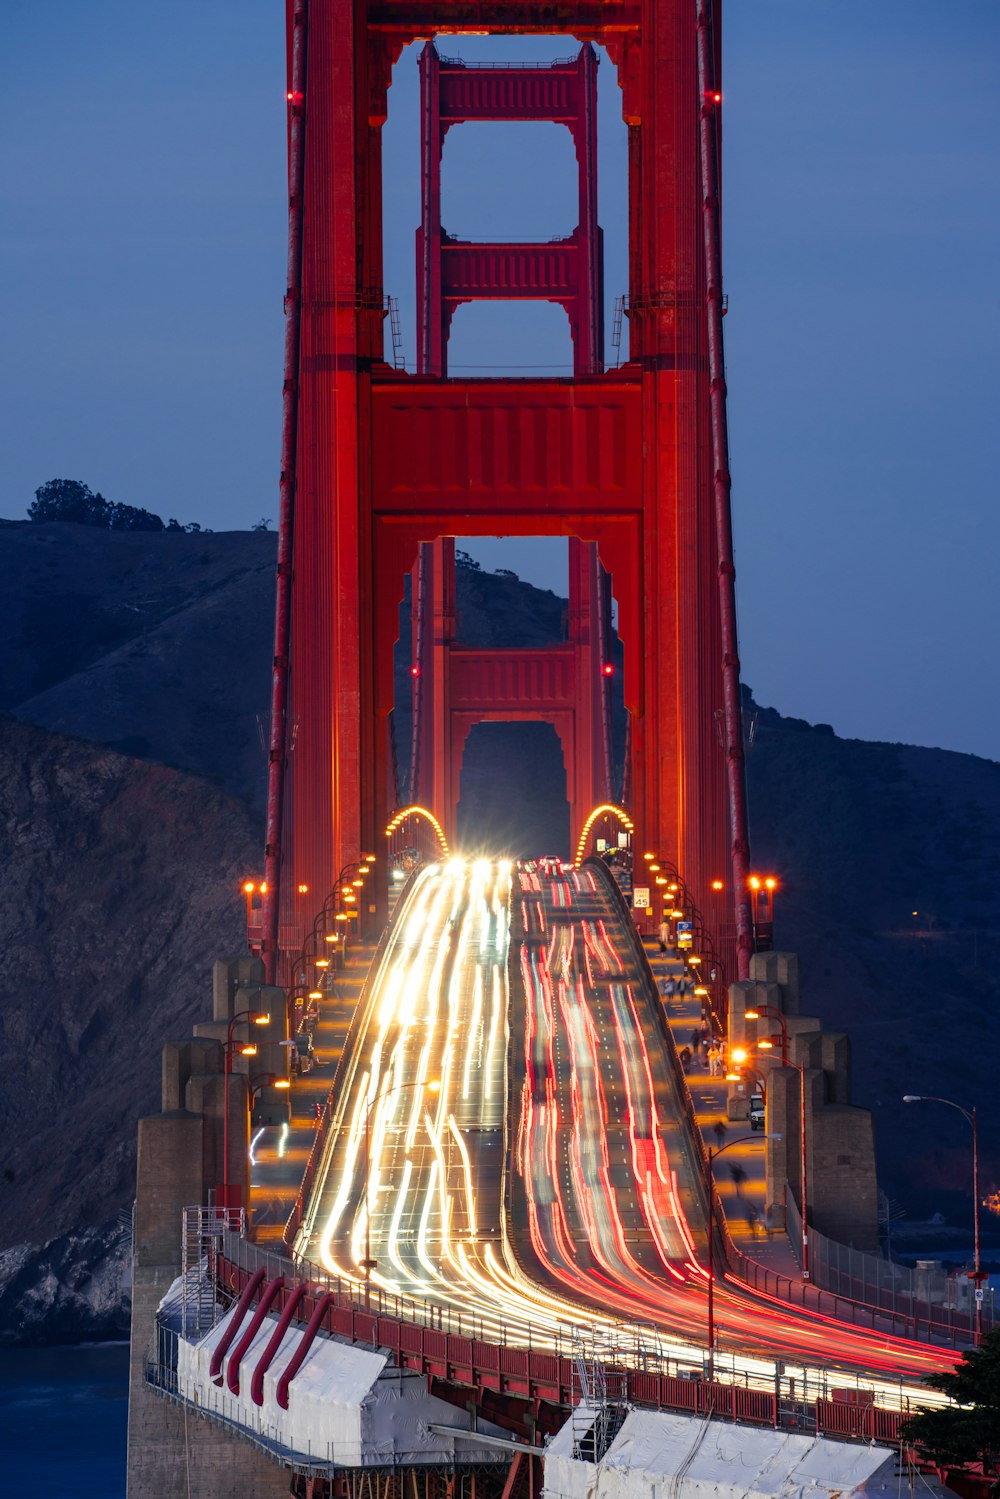 cars on bridge during night time